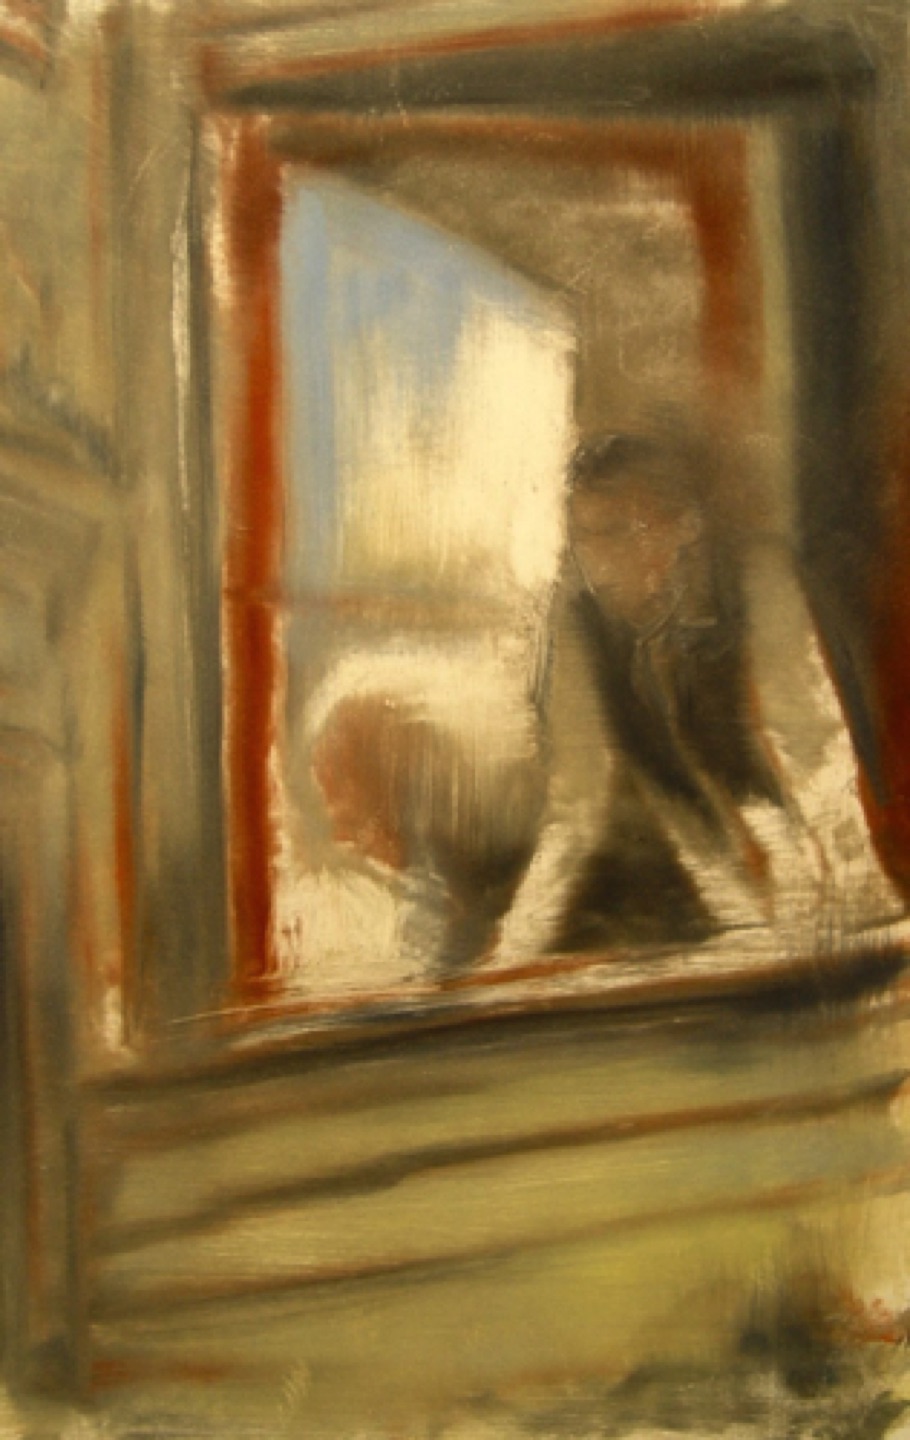 Gregg Chadwick
Der Maler-Fenster (The Painter’s Window)
30”x22” monotype on paper 2011